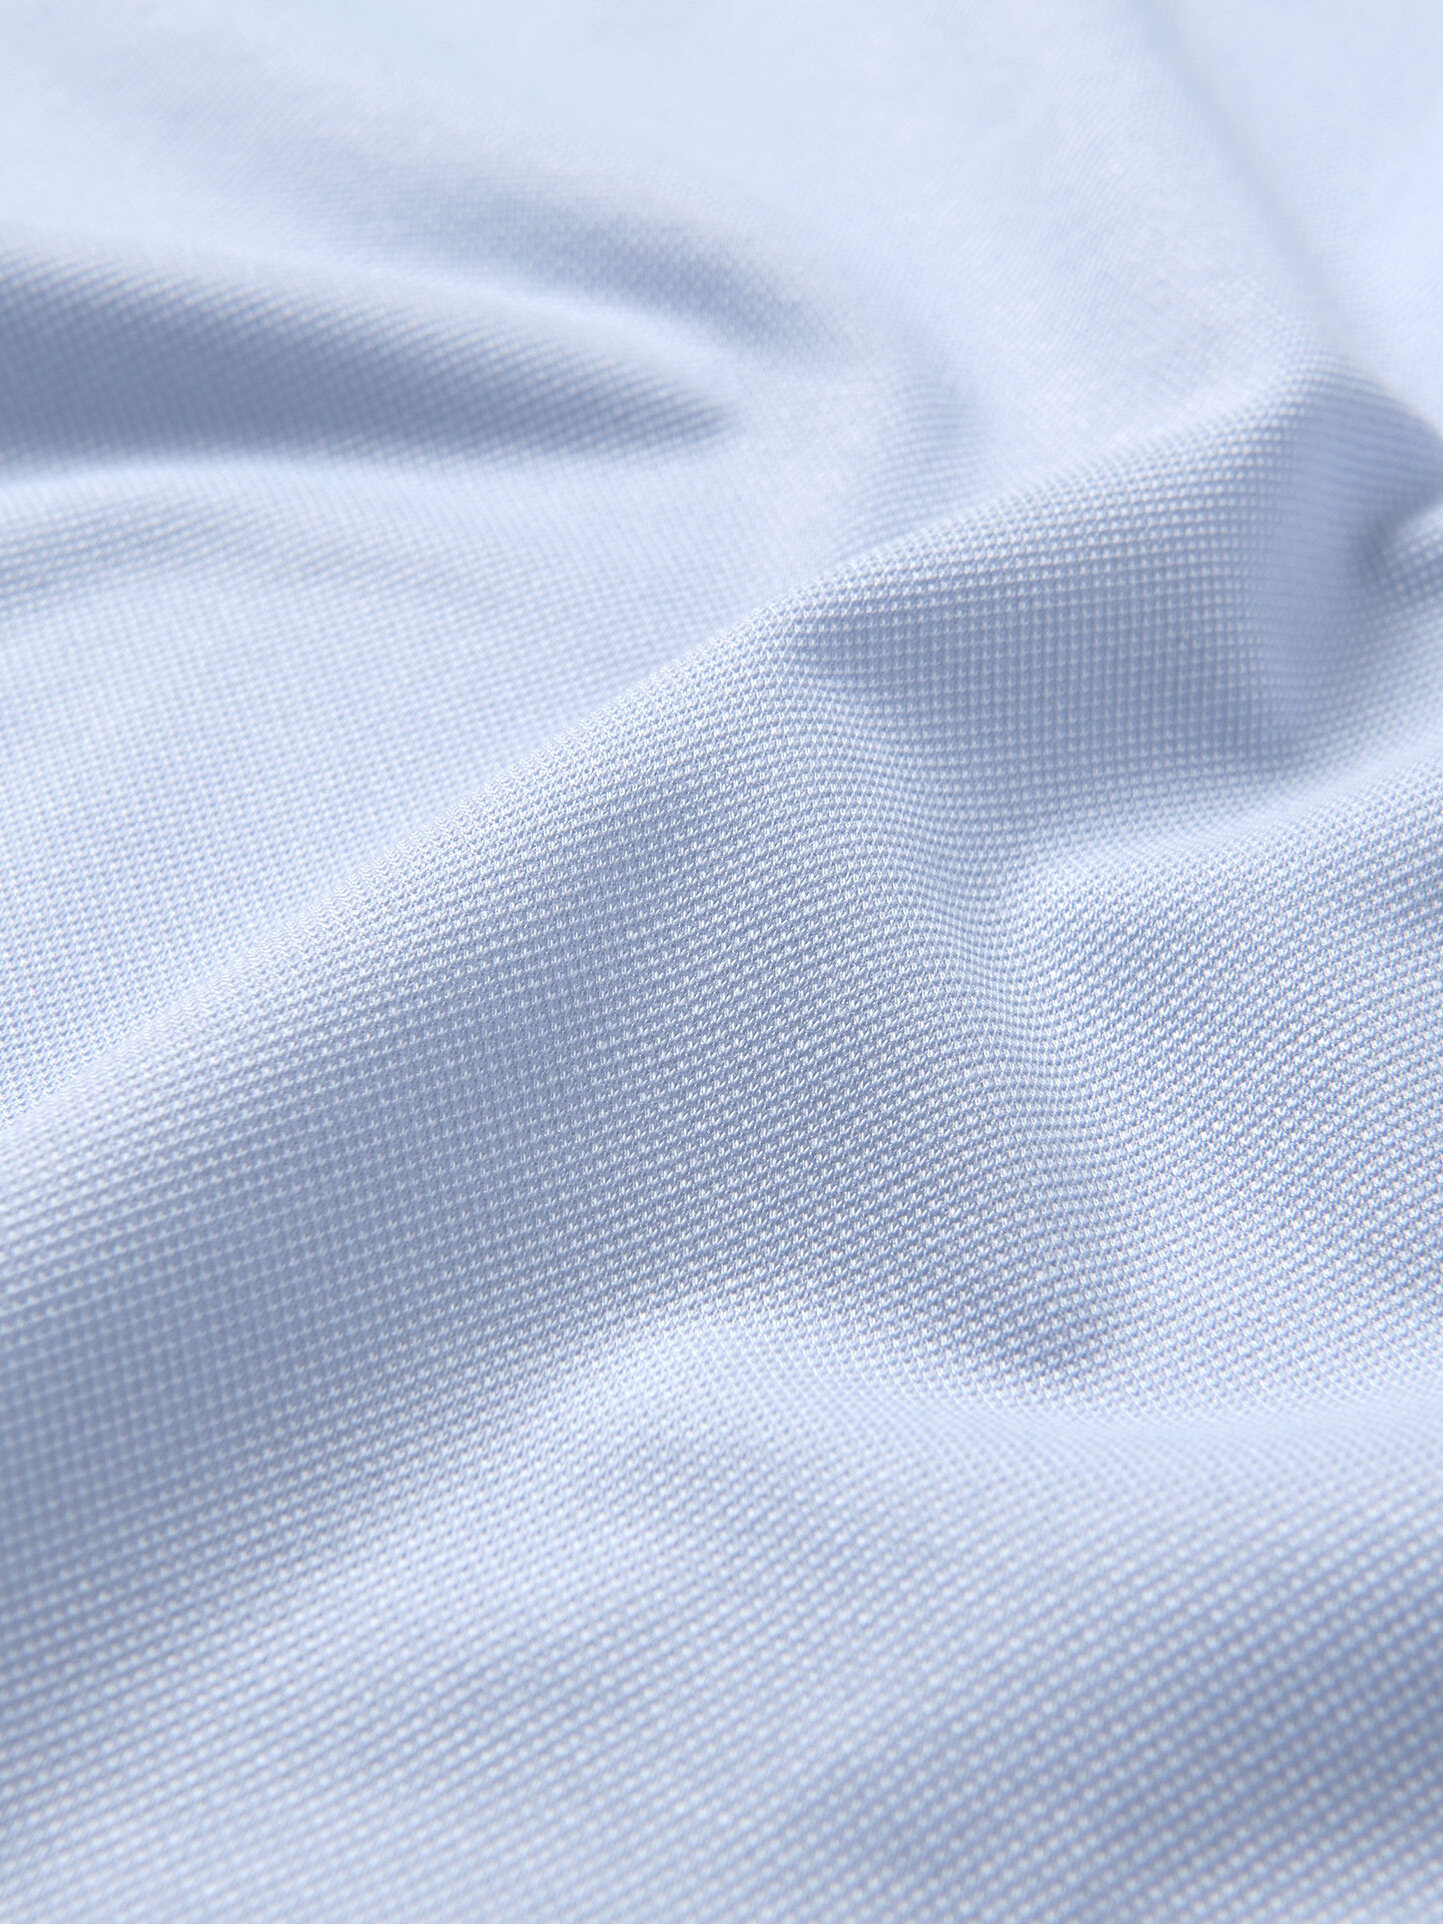 Japanese Light Blue Performance Knit Pique Shirts by Proper Cloth